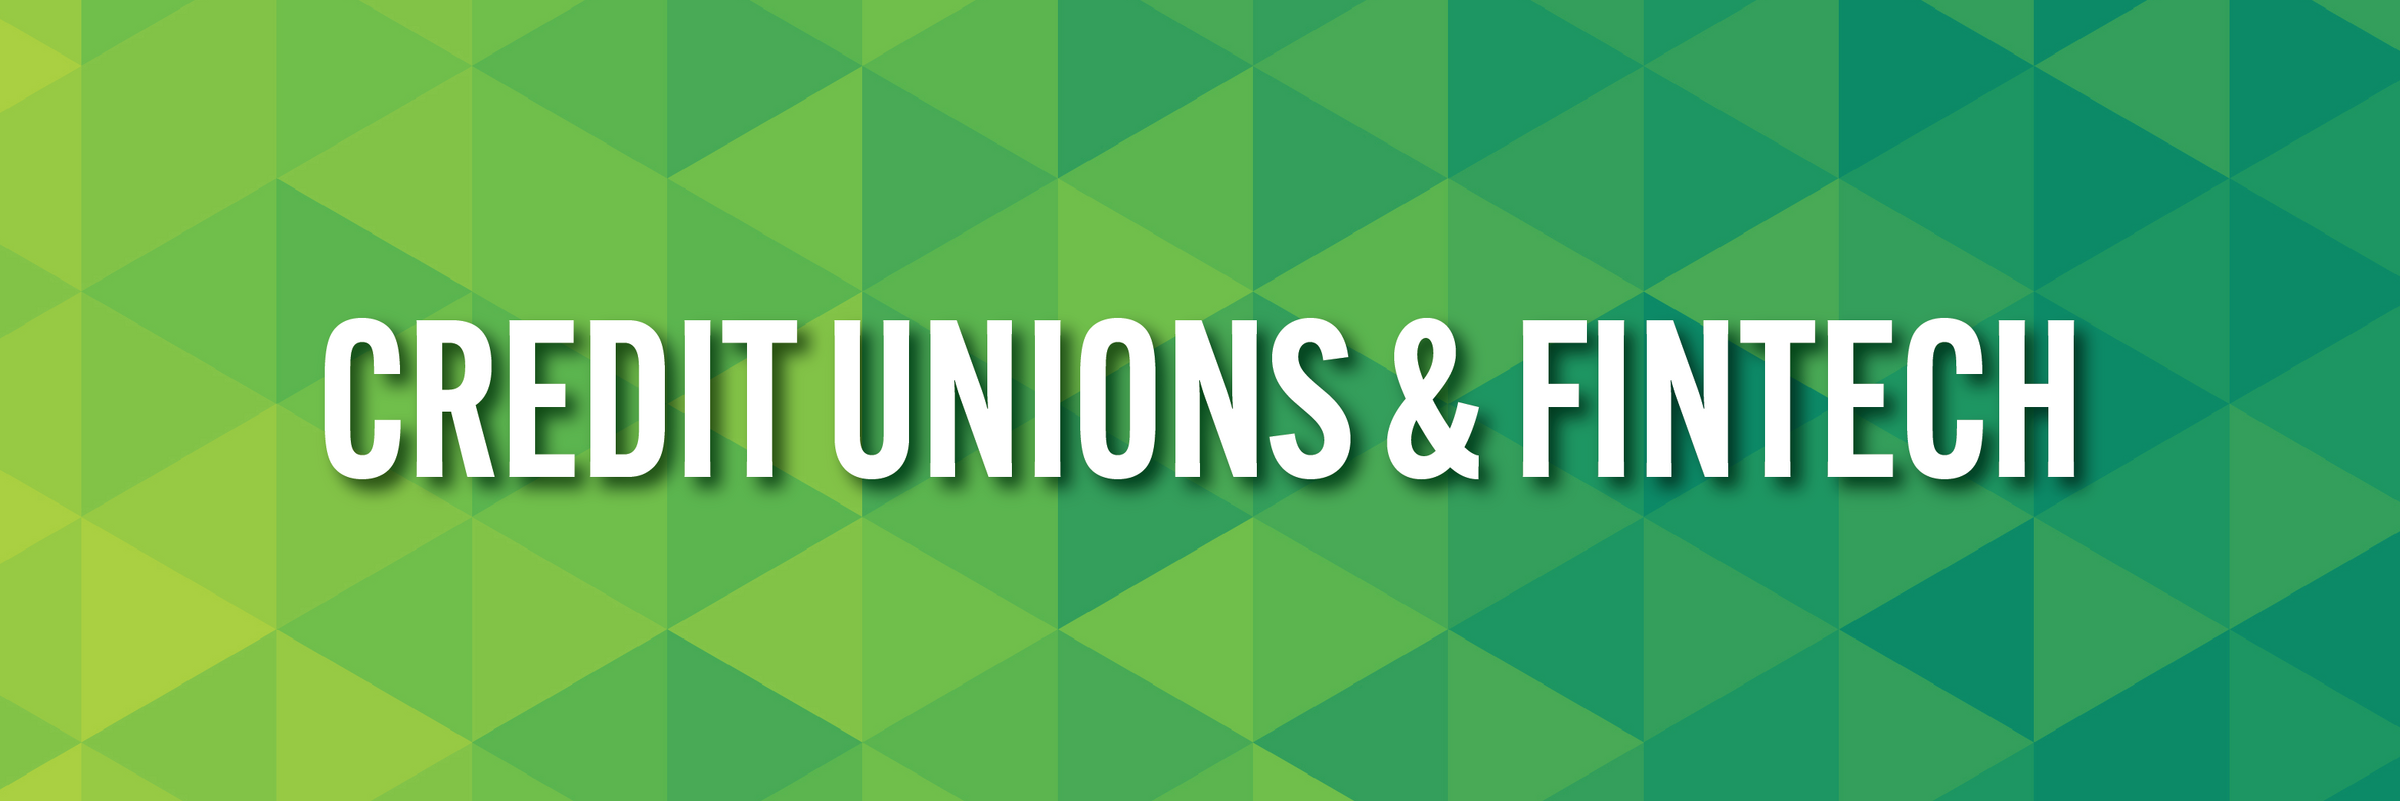 Fintech & Credit Unions